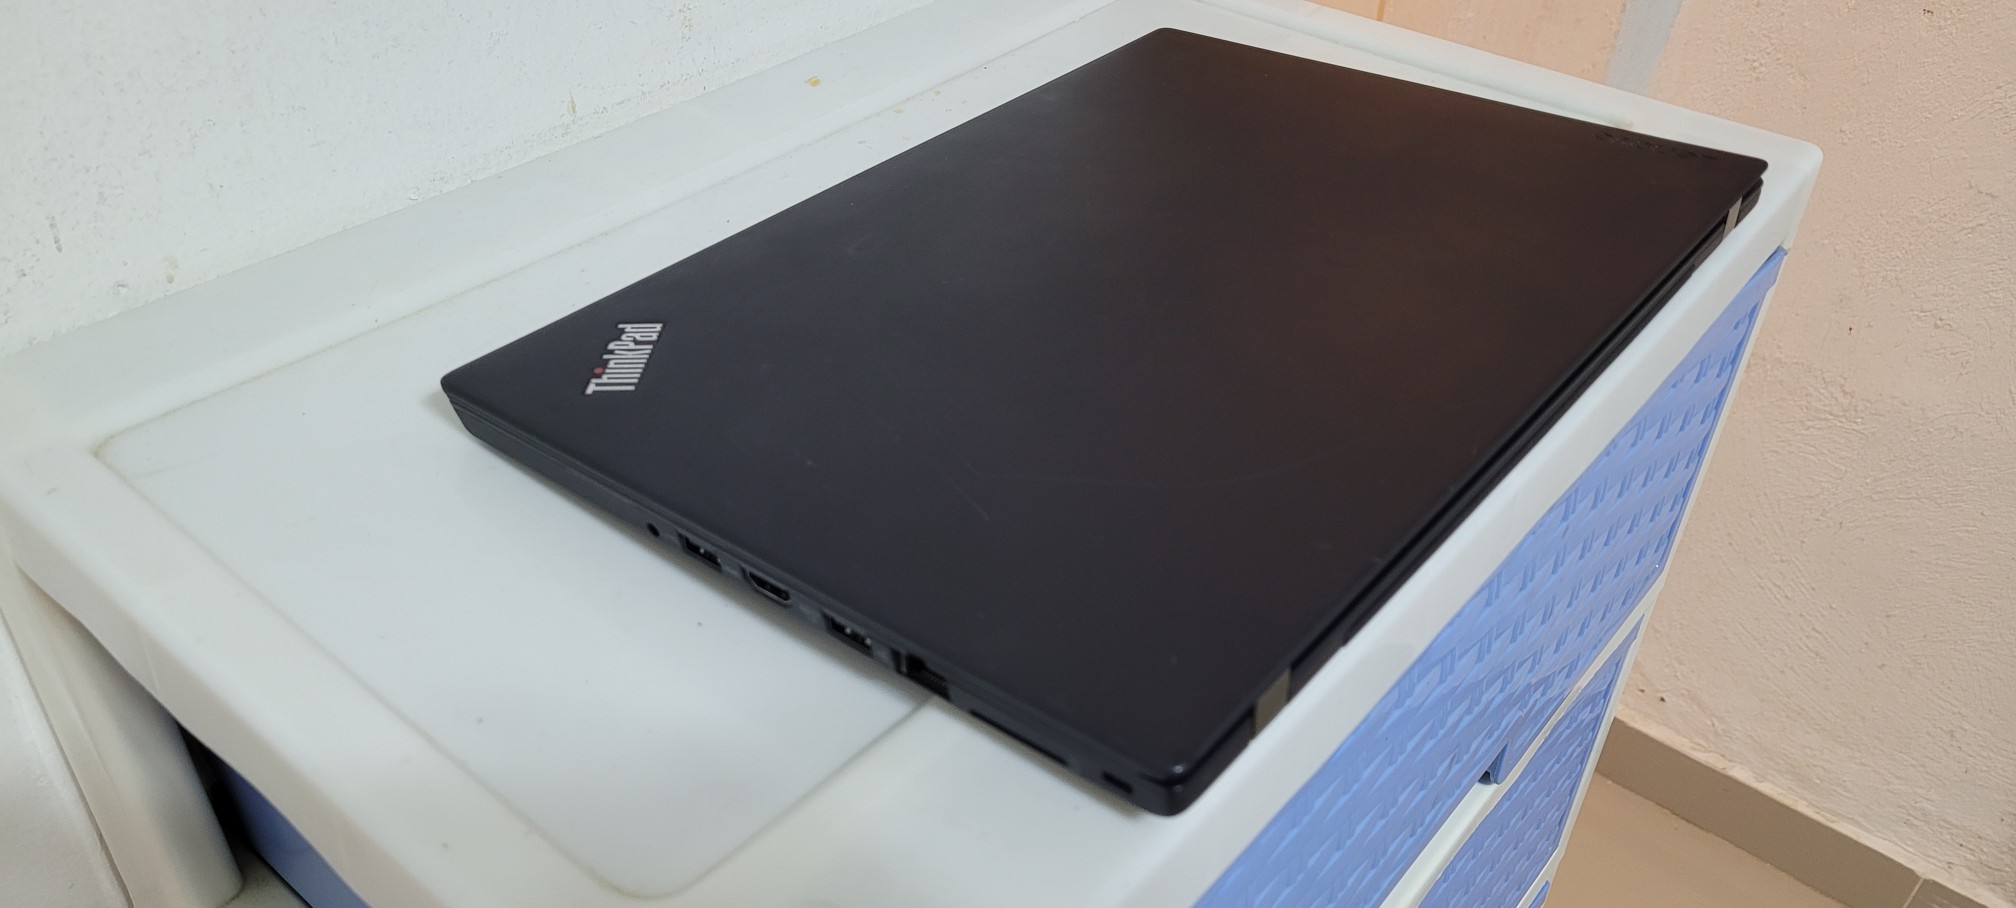 computadoras y laptops - Laptop lenovo thinKpad 14 Pulg Core i7  2